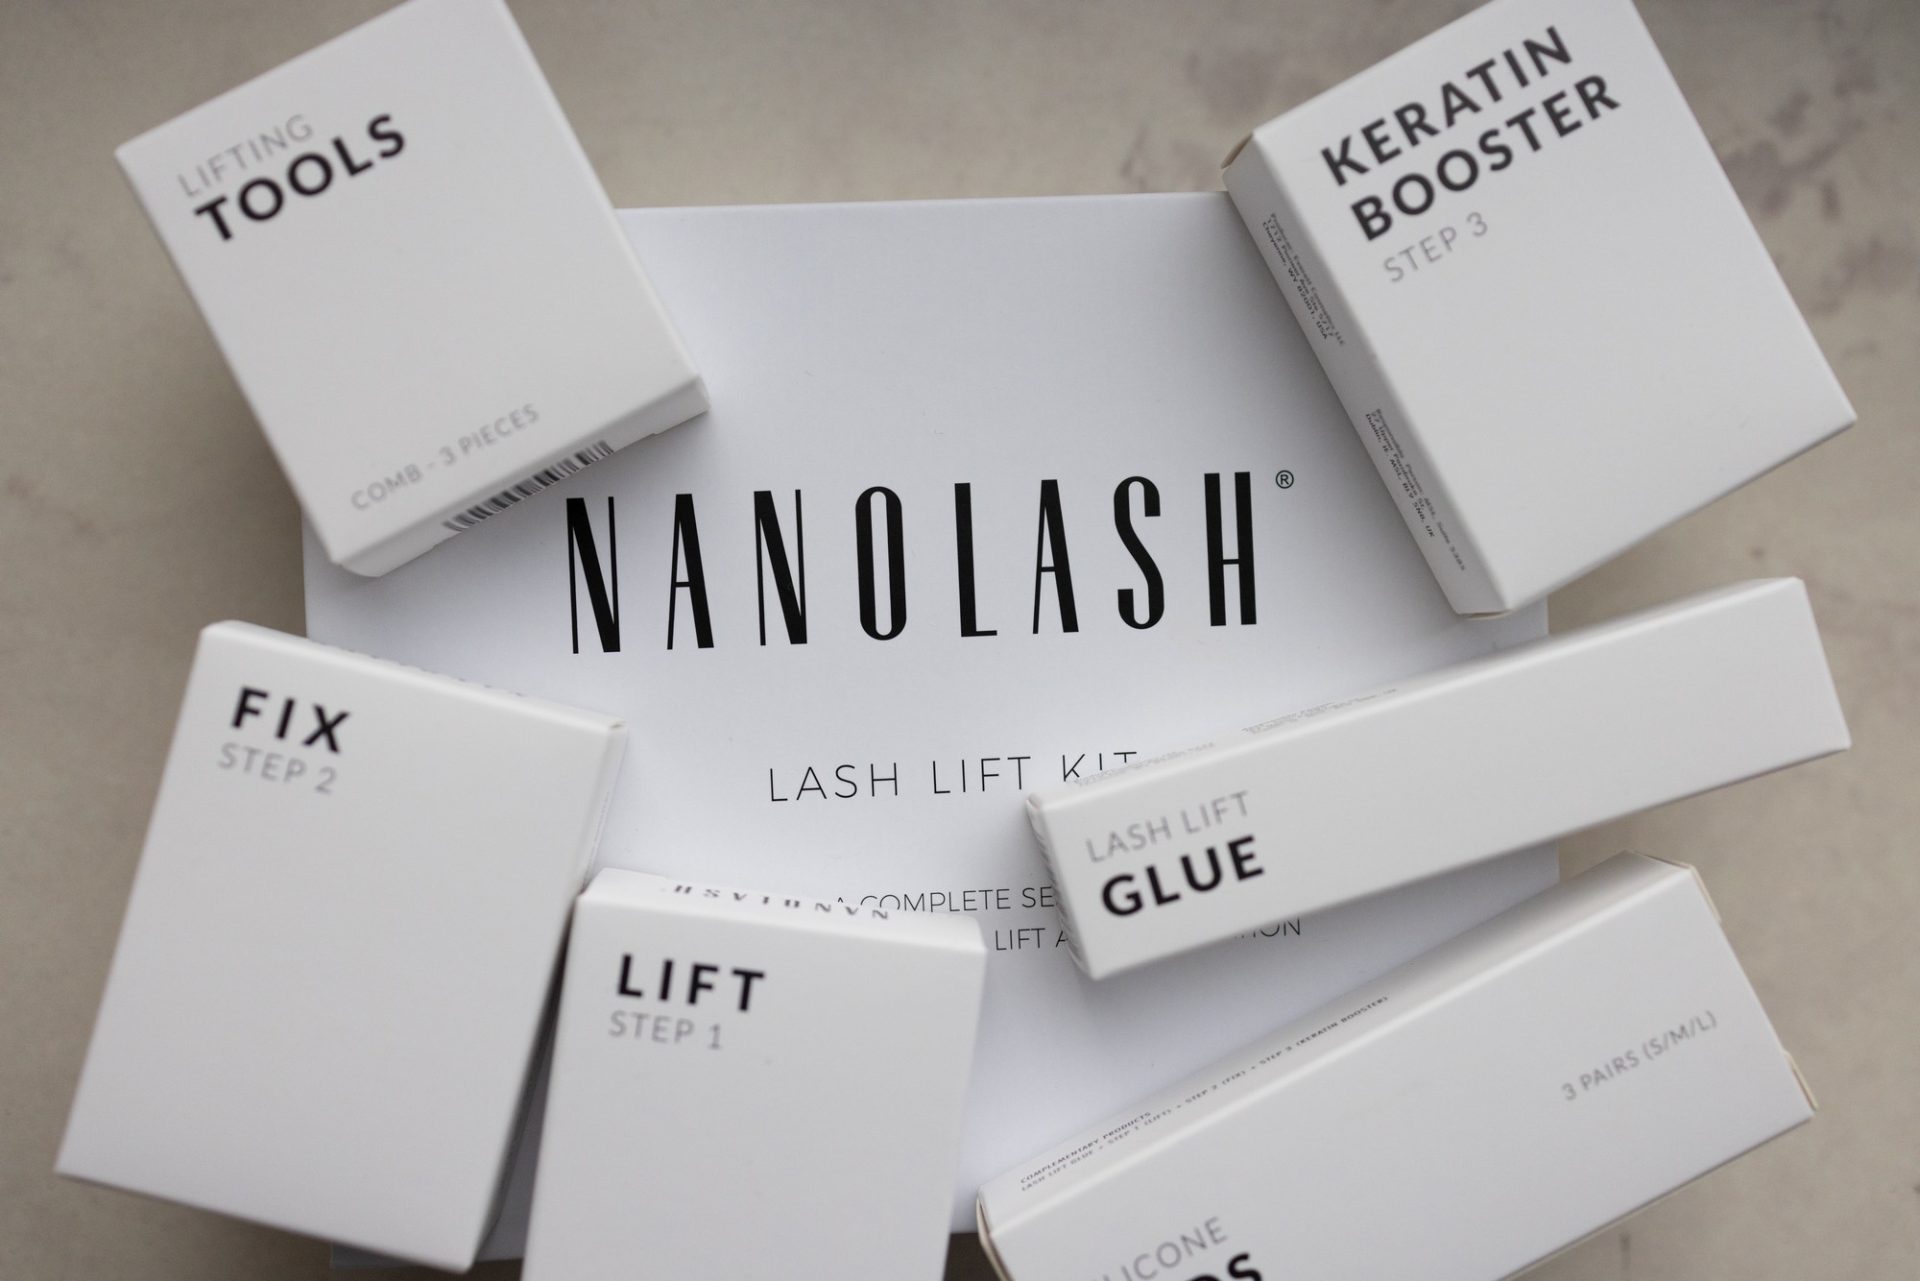 Nanolash Lash Lift Kit. Did This Kit For At-Home Lash Lamination Meet My Expectations?